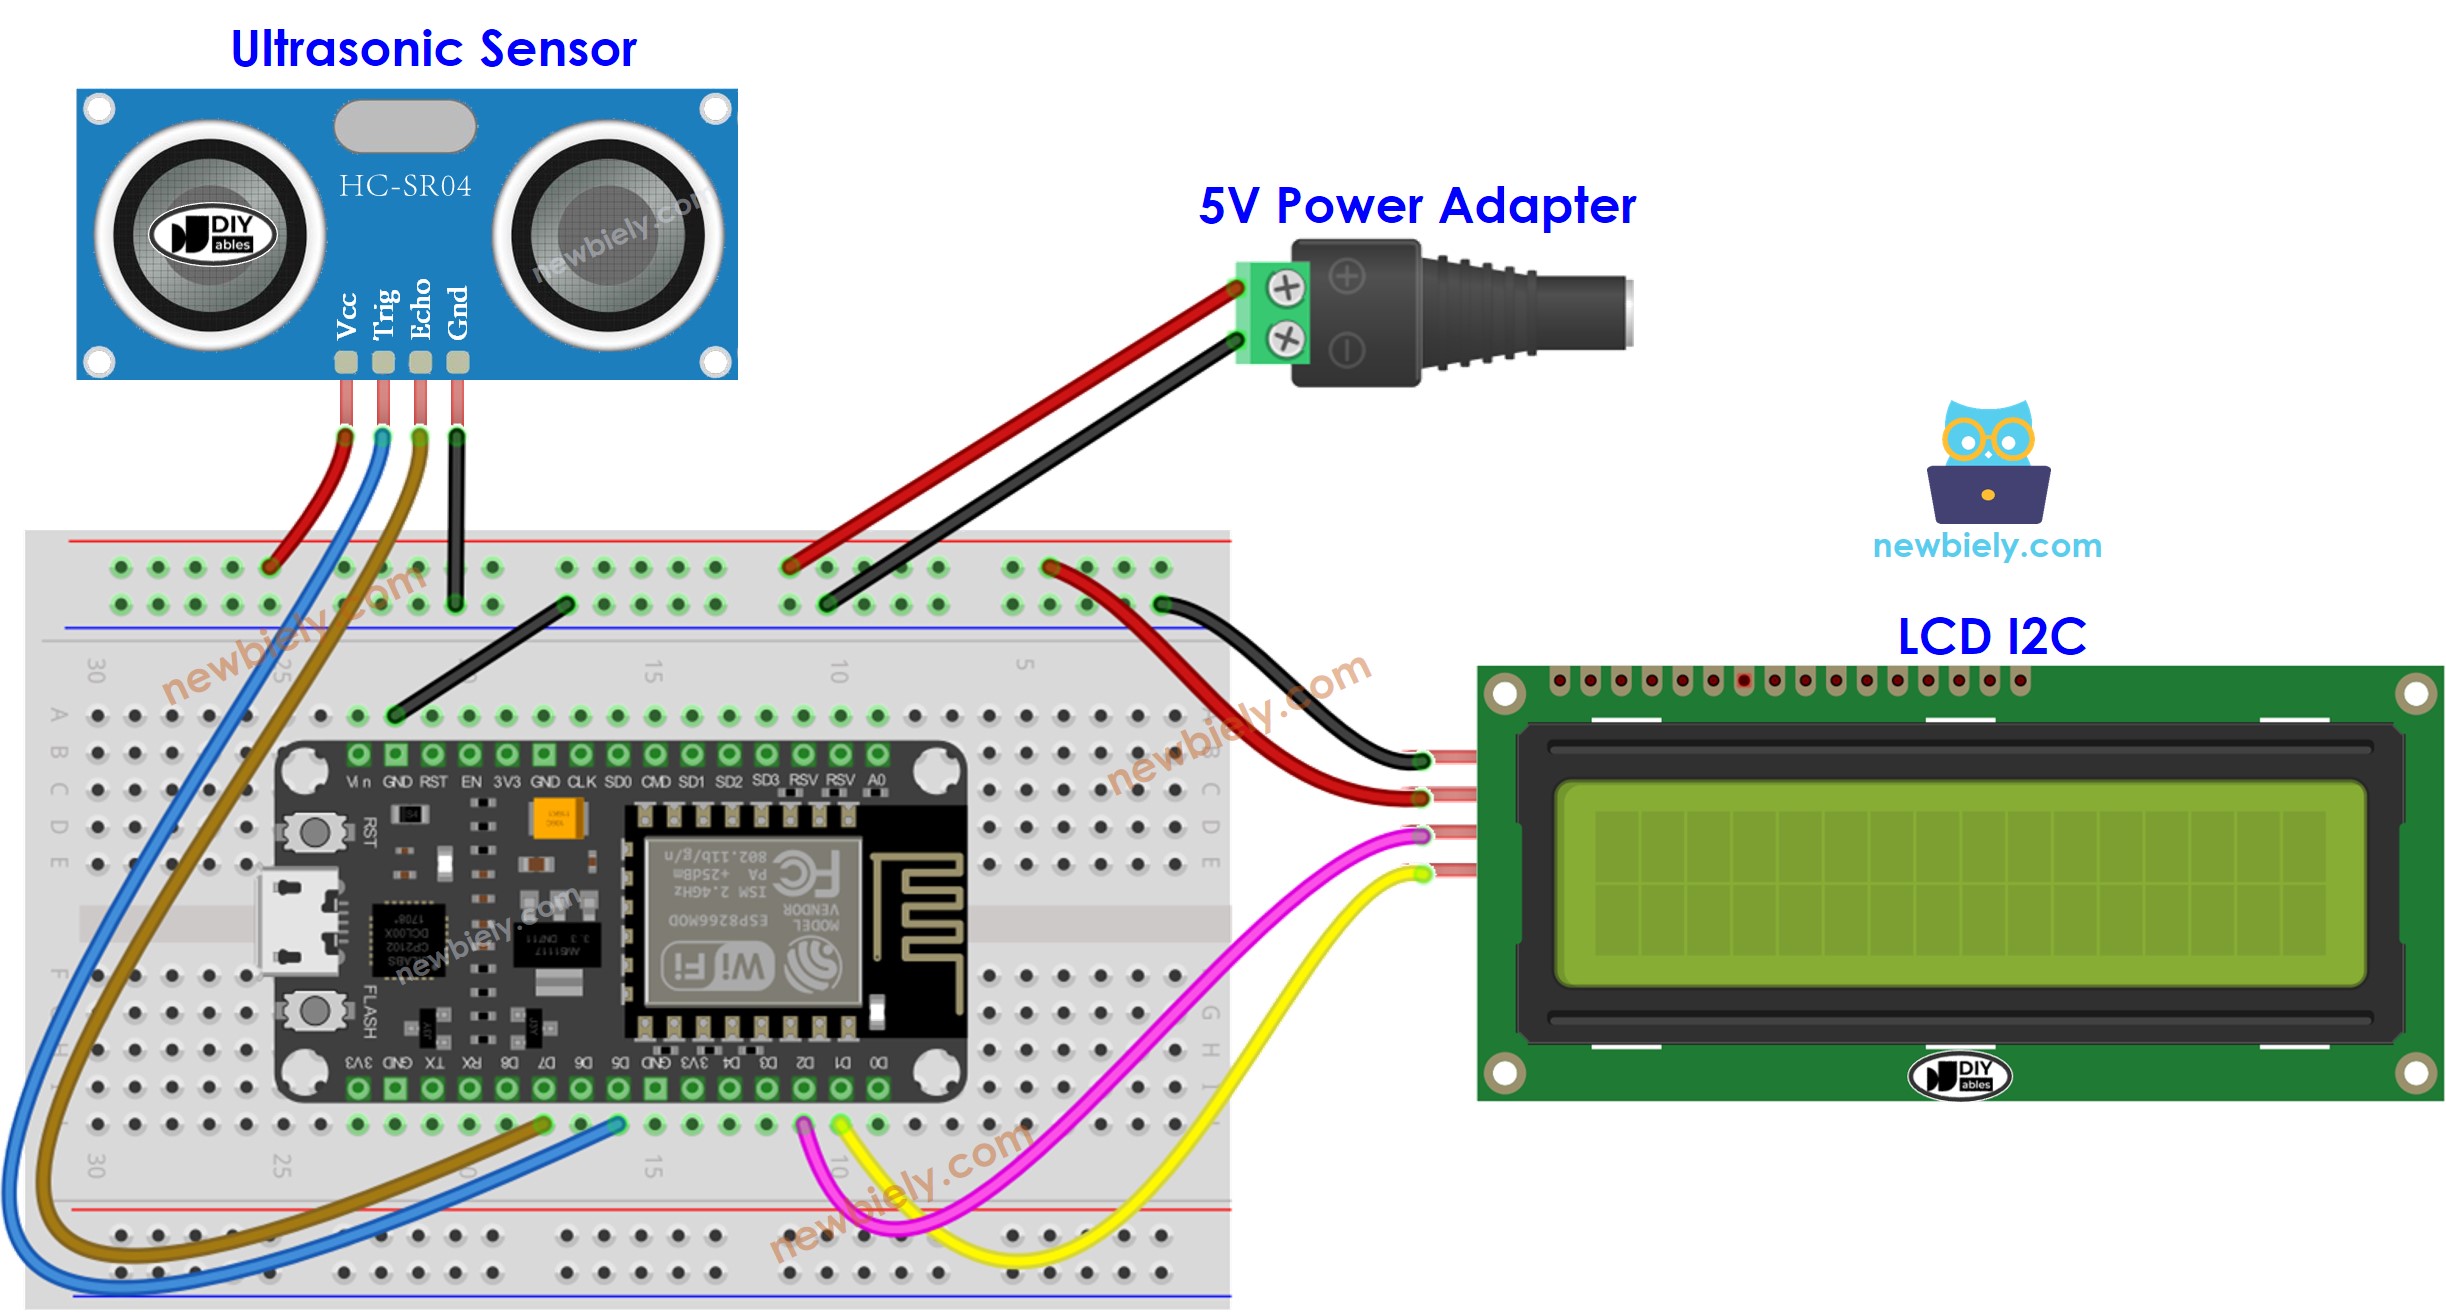 The wiring diagram between ESP8266 NodeMCU and Ultrasonic LCD